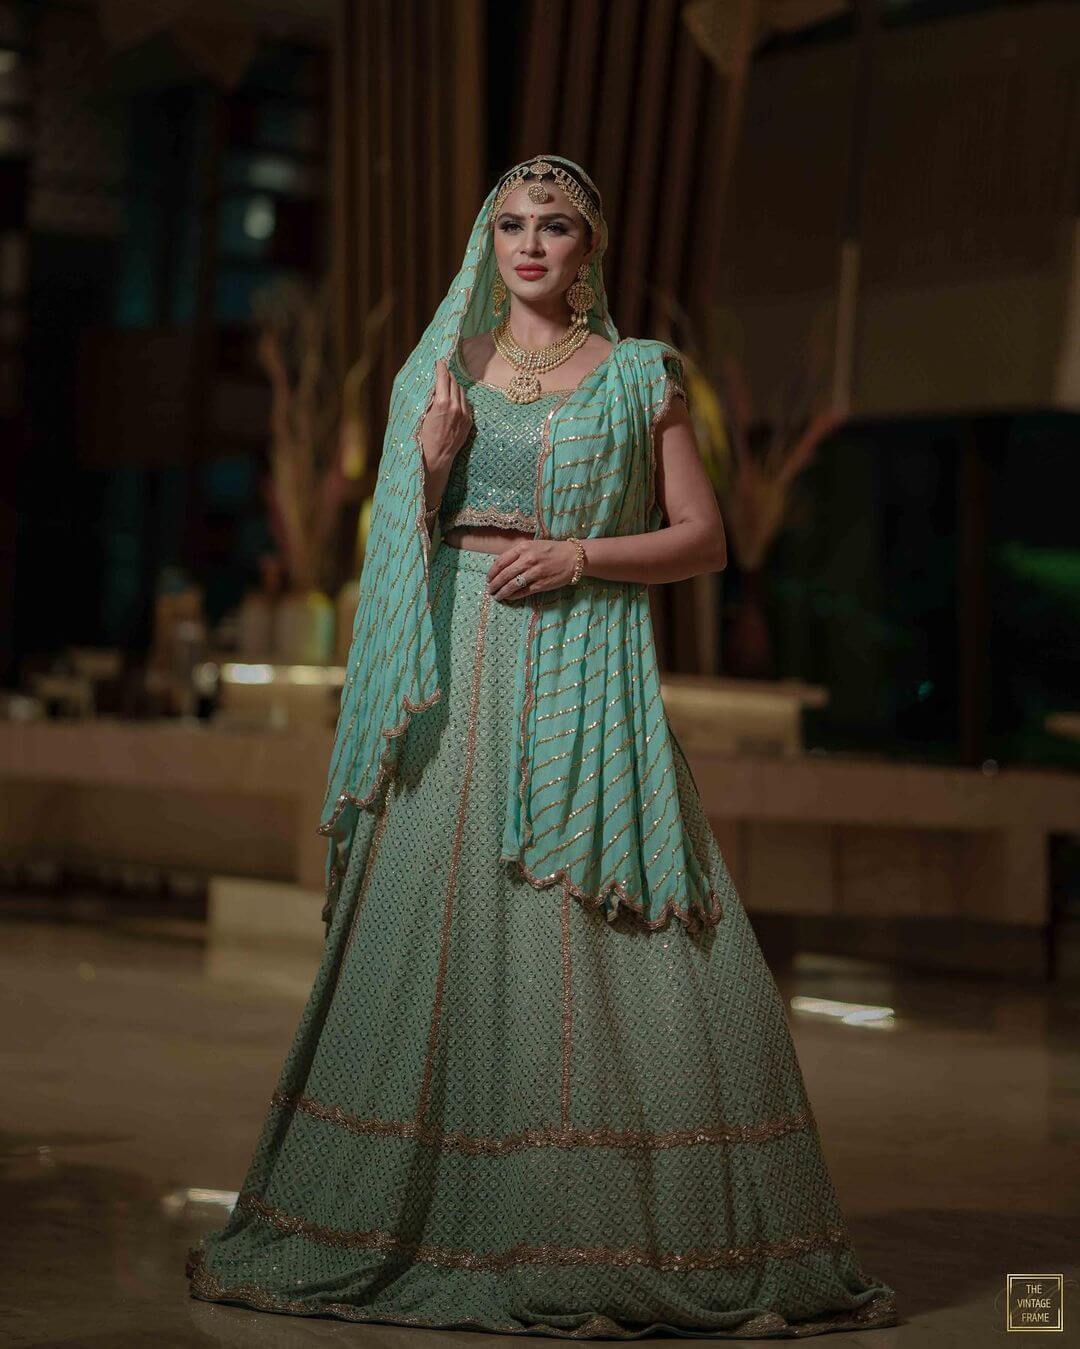 Aashika Goradia In Light Blue Glittery Lehenga Outfit Aashka Goradia Sexy Outfit And Looks